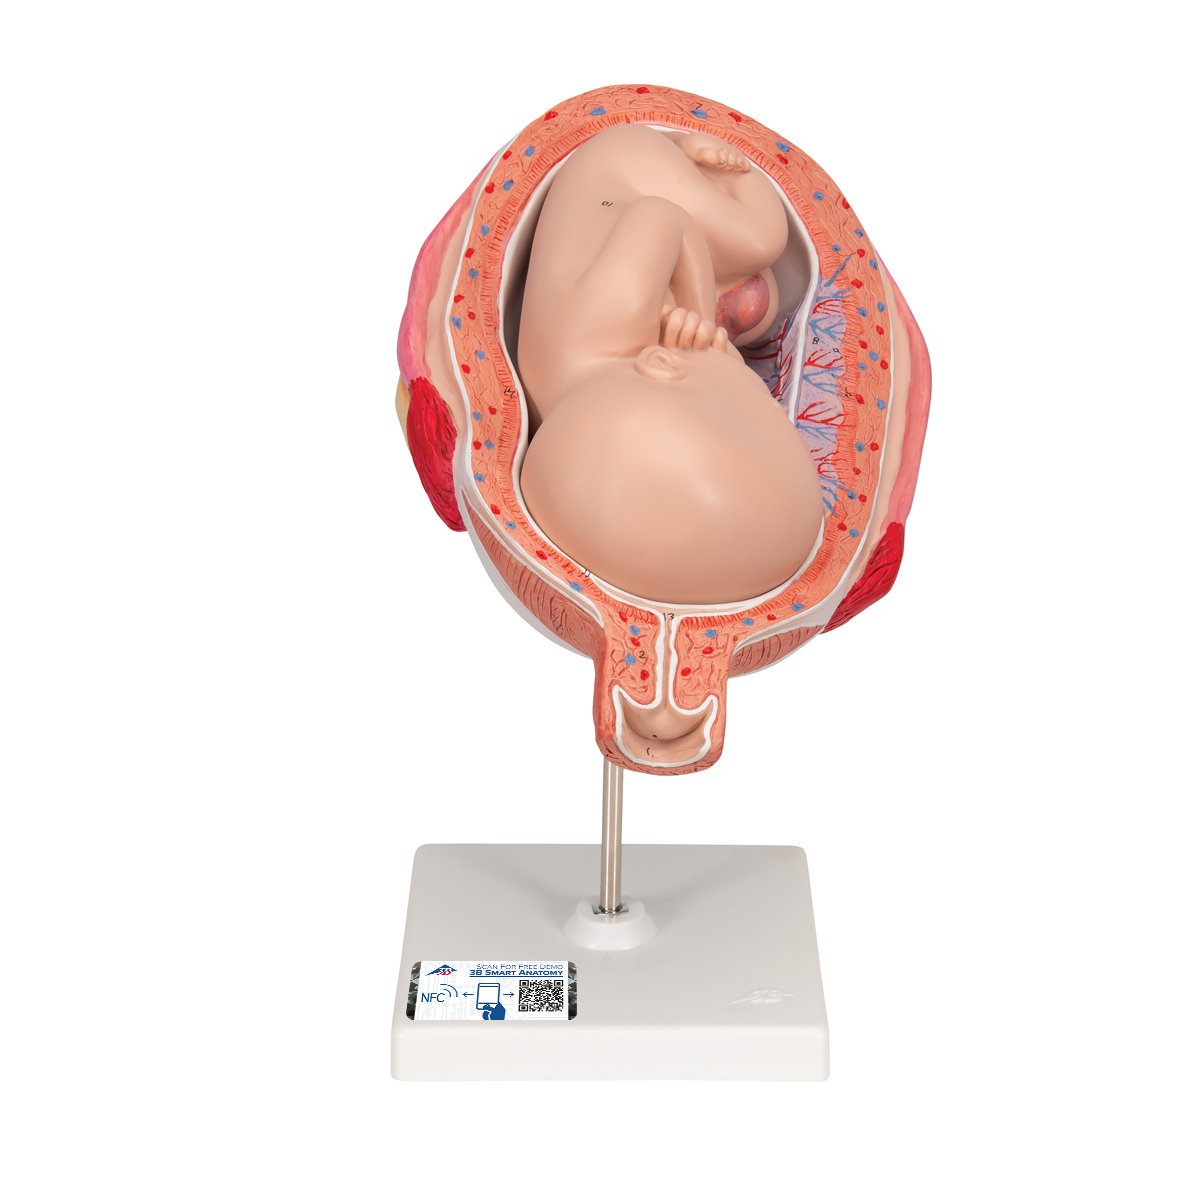 Fetus Modell, 7. Monat - 3B Smart Anatomy, Bestellnummer 1000329, L10/8, 3B Scientific